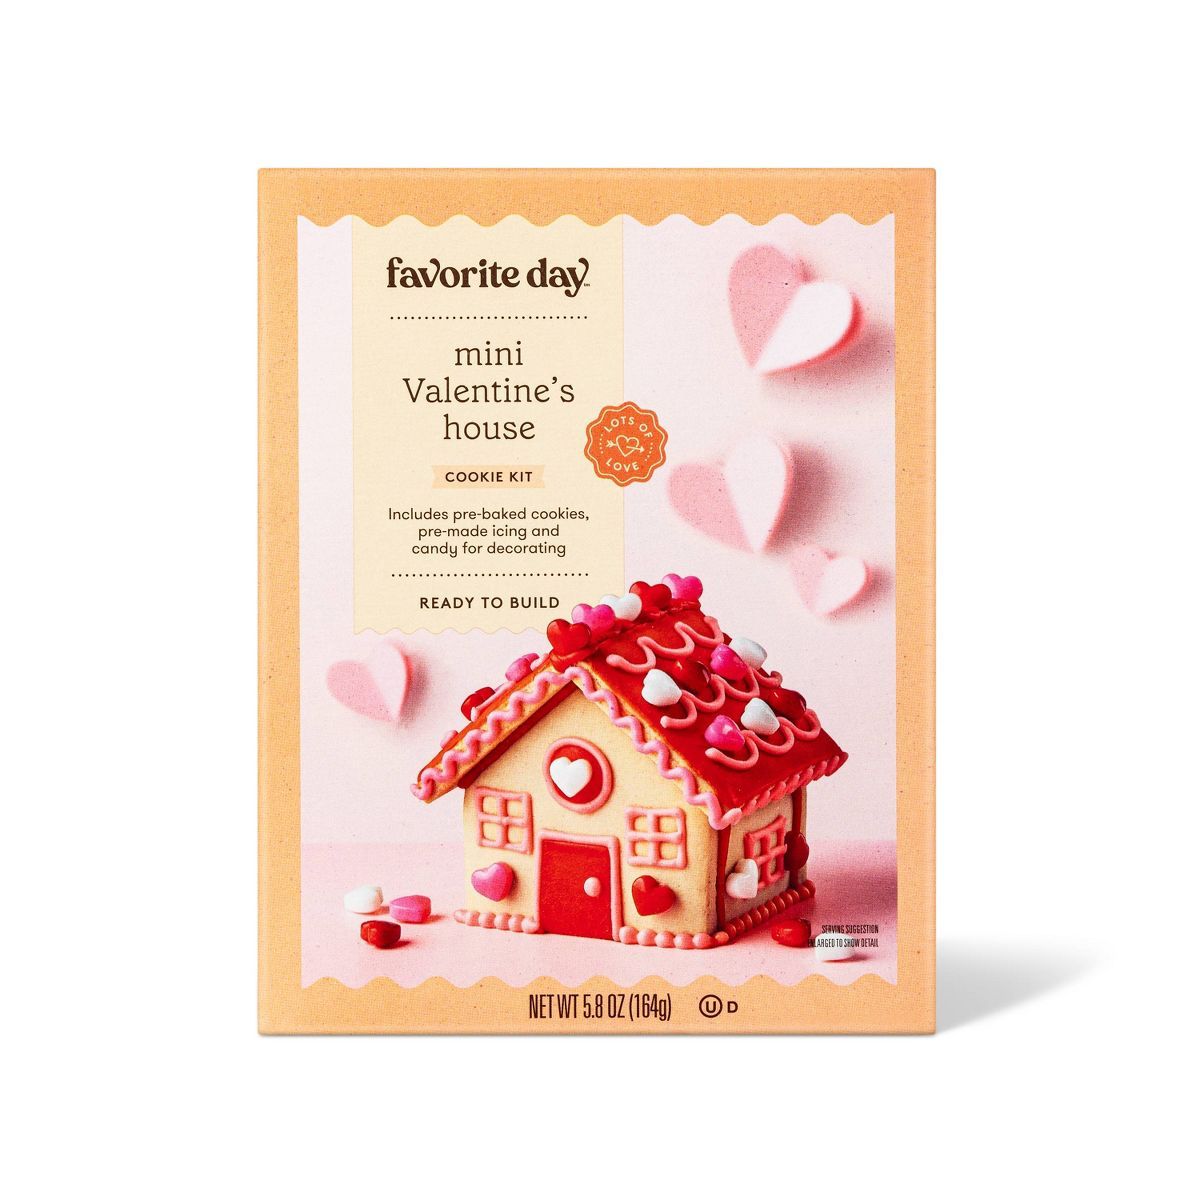 Mini Valentine's House Cookie Kit - 5.8oz - Favorite Day™ | Target